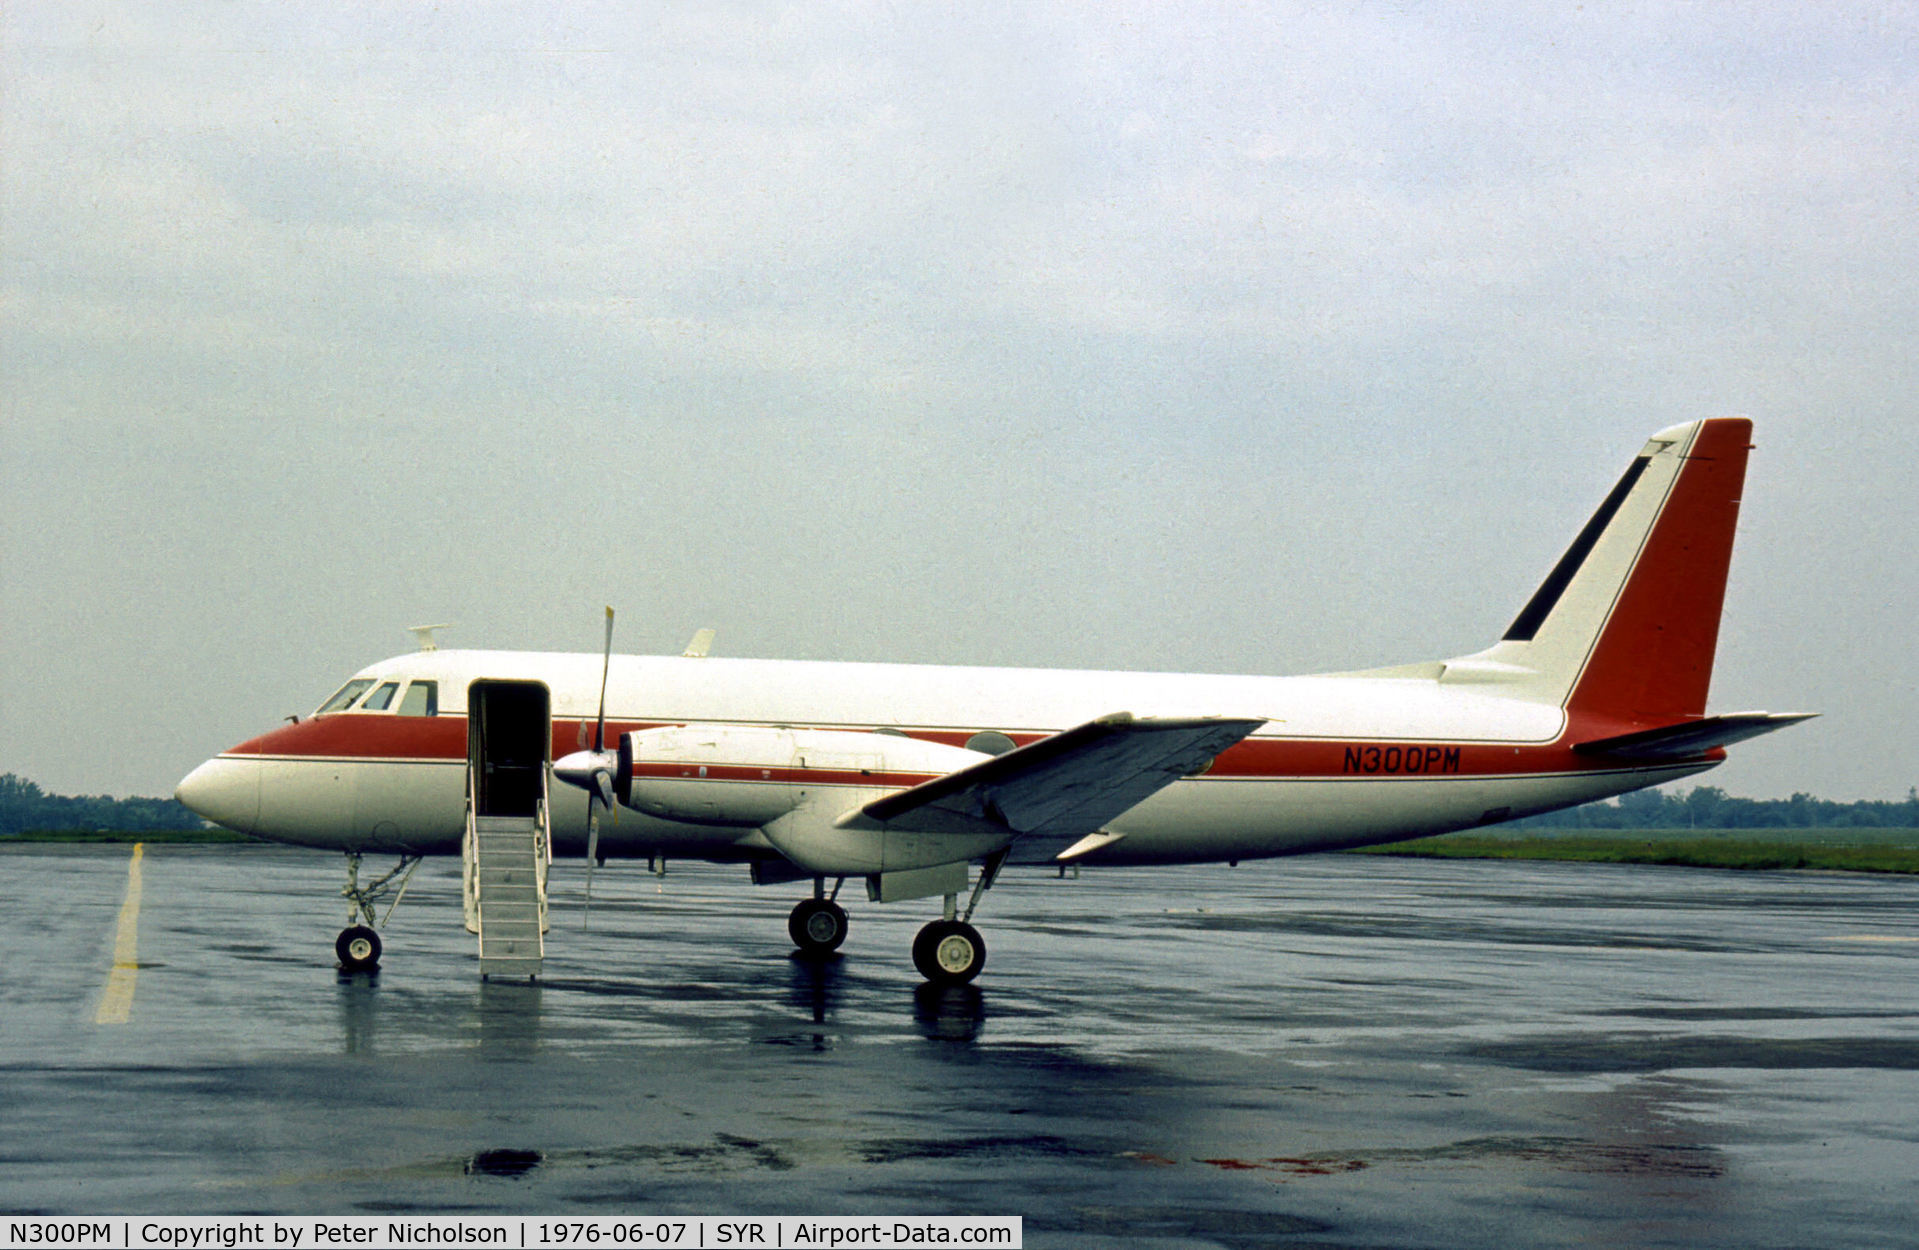 N300PM, 1963 Grumman G-159 Gulfstream 1 C/N 112, Gulfstream I of the Philip Morris Company seen at Syracuse in the Summer of 1976.